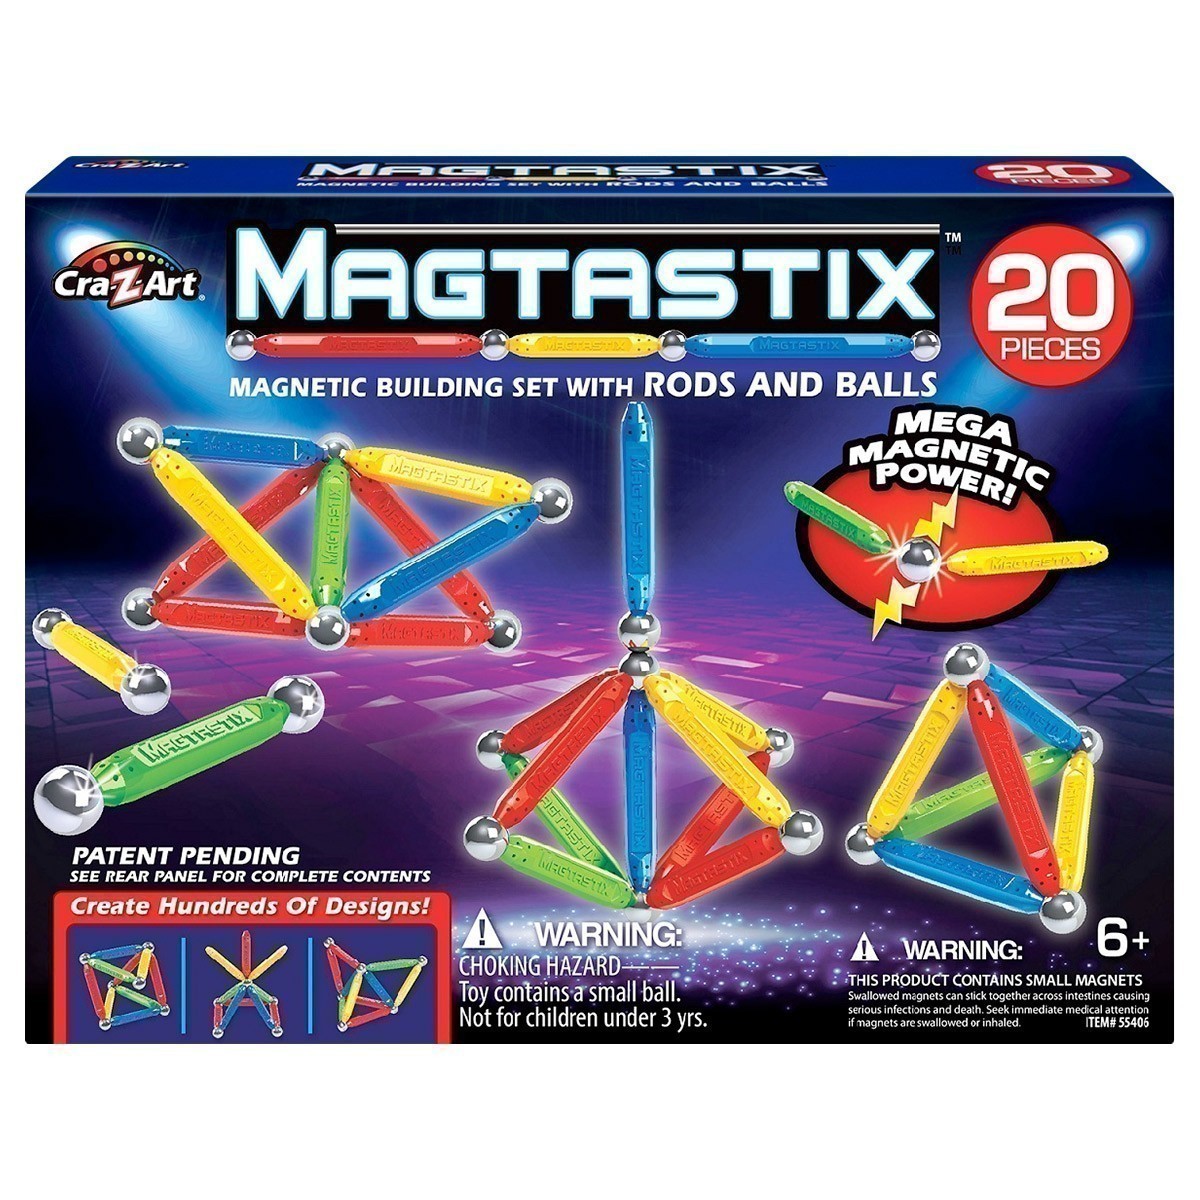 Cra-Z-Art - Magtastix 20 Piece Set